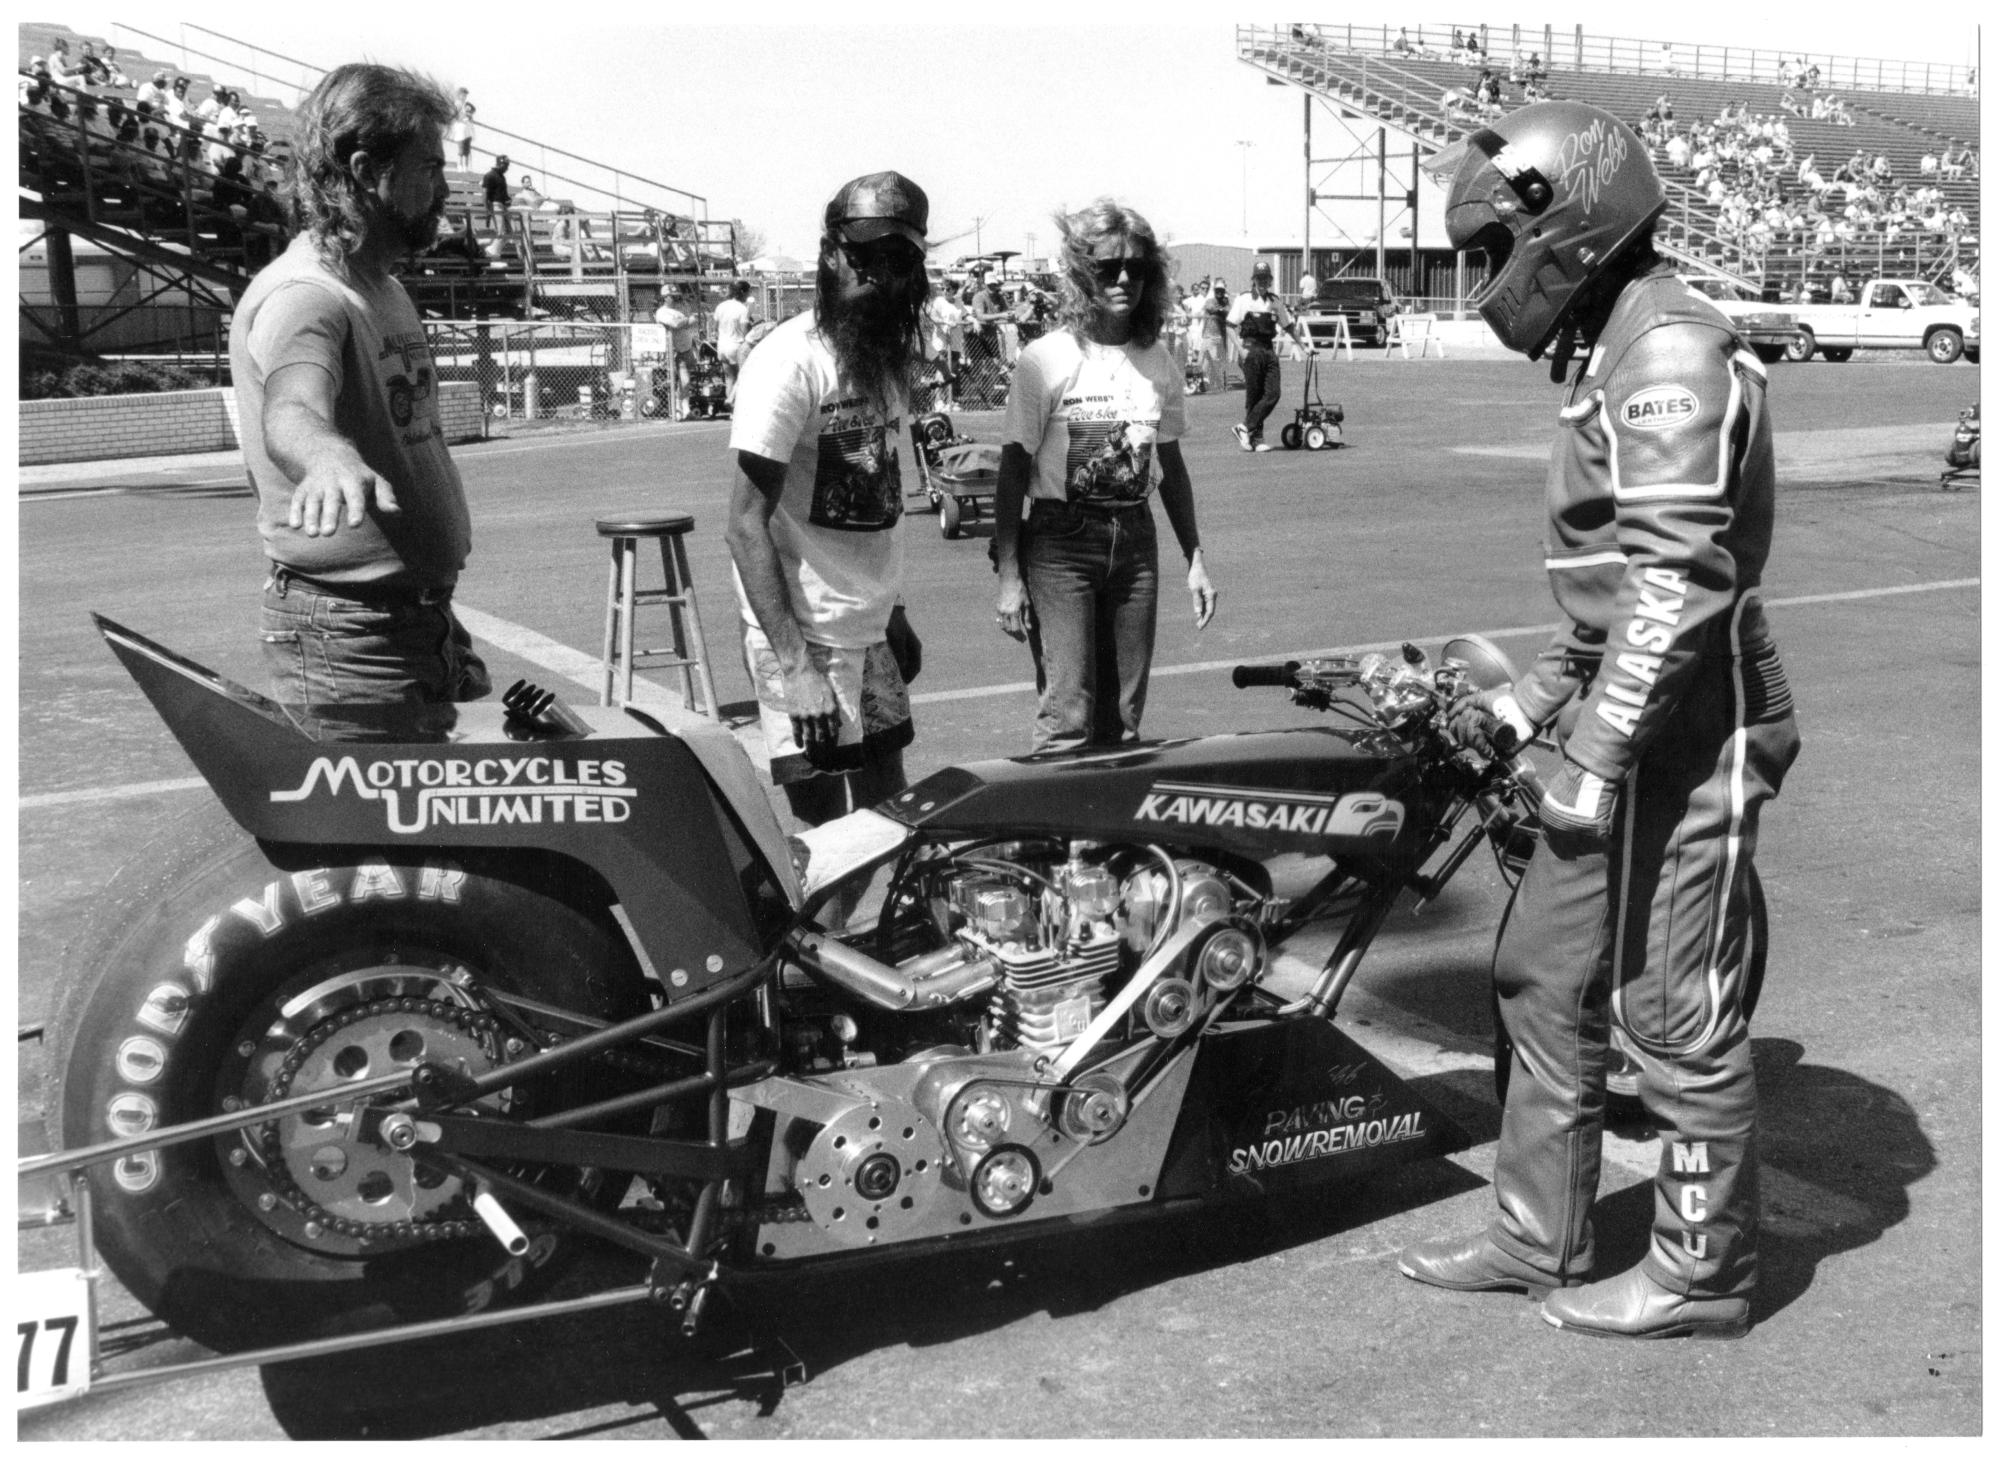 Texas Motor Drag Racing (1991) - Drag Racing BW #12